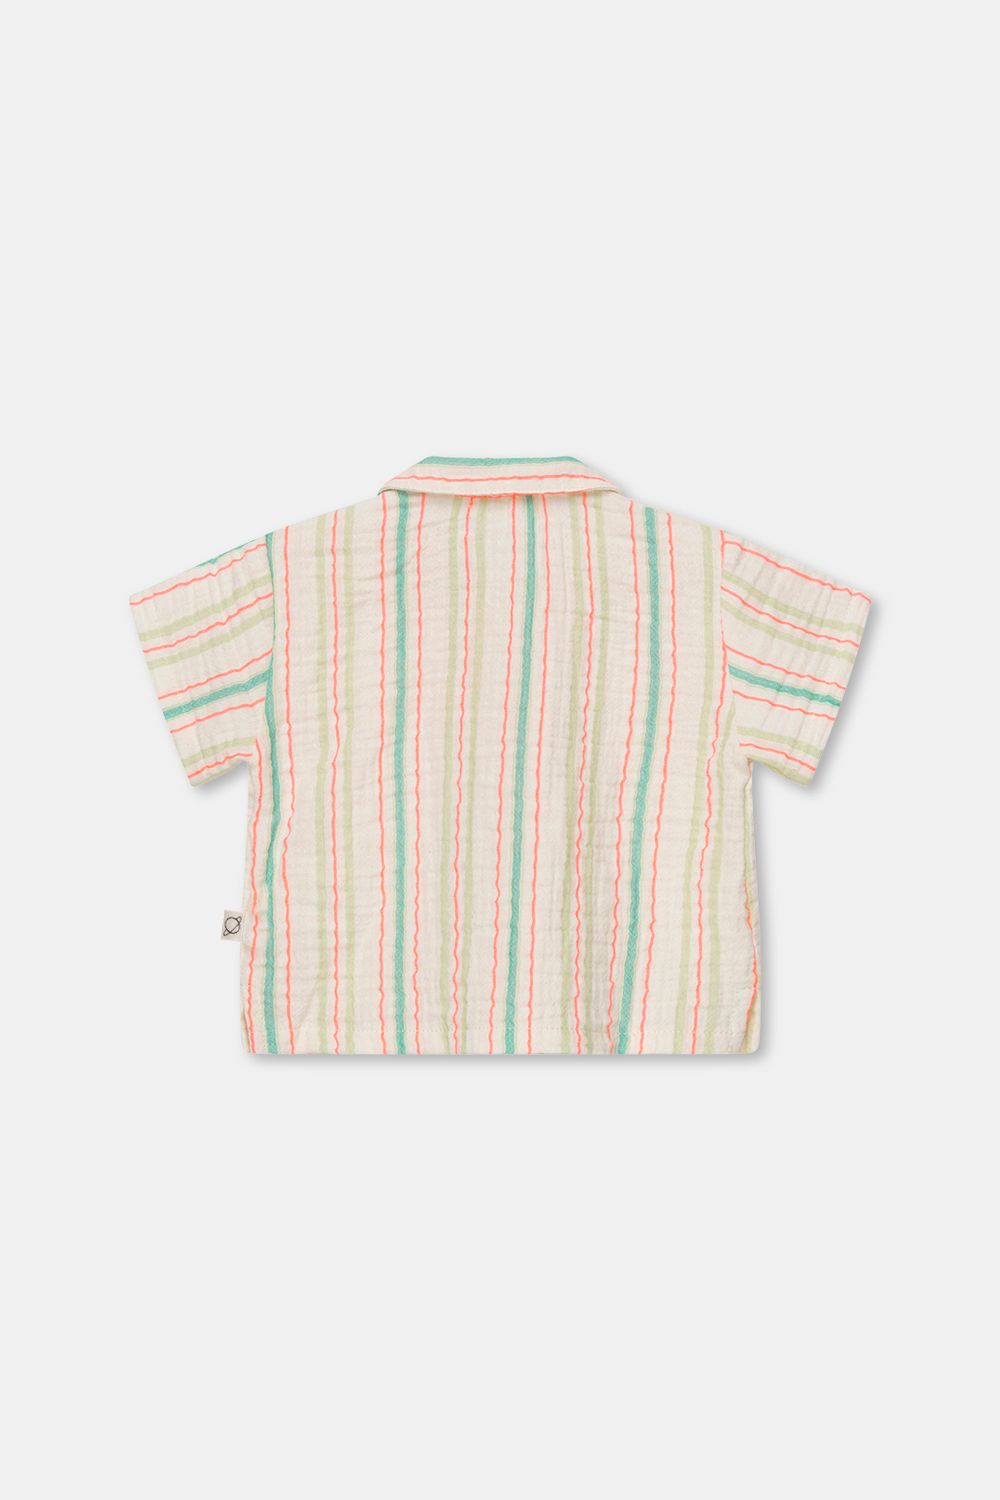 My Little cozmo - LOUIS218 - stripe shirt